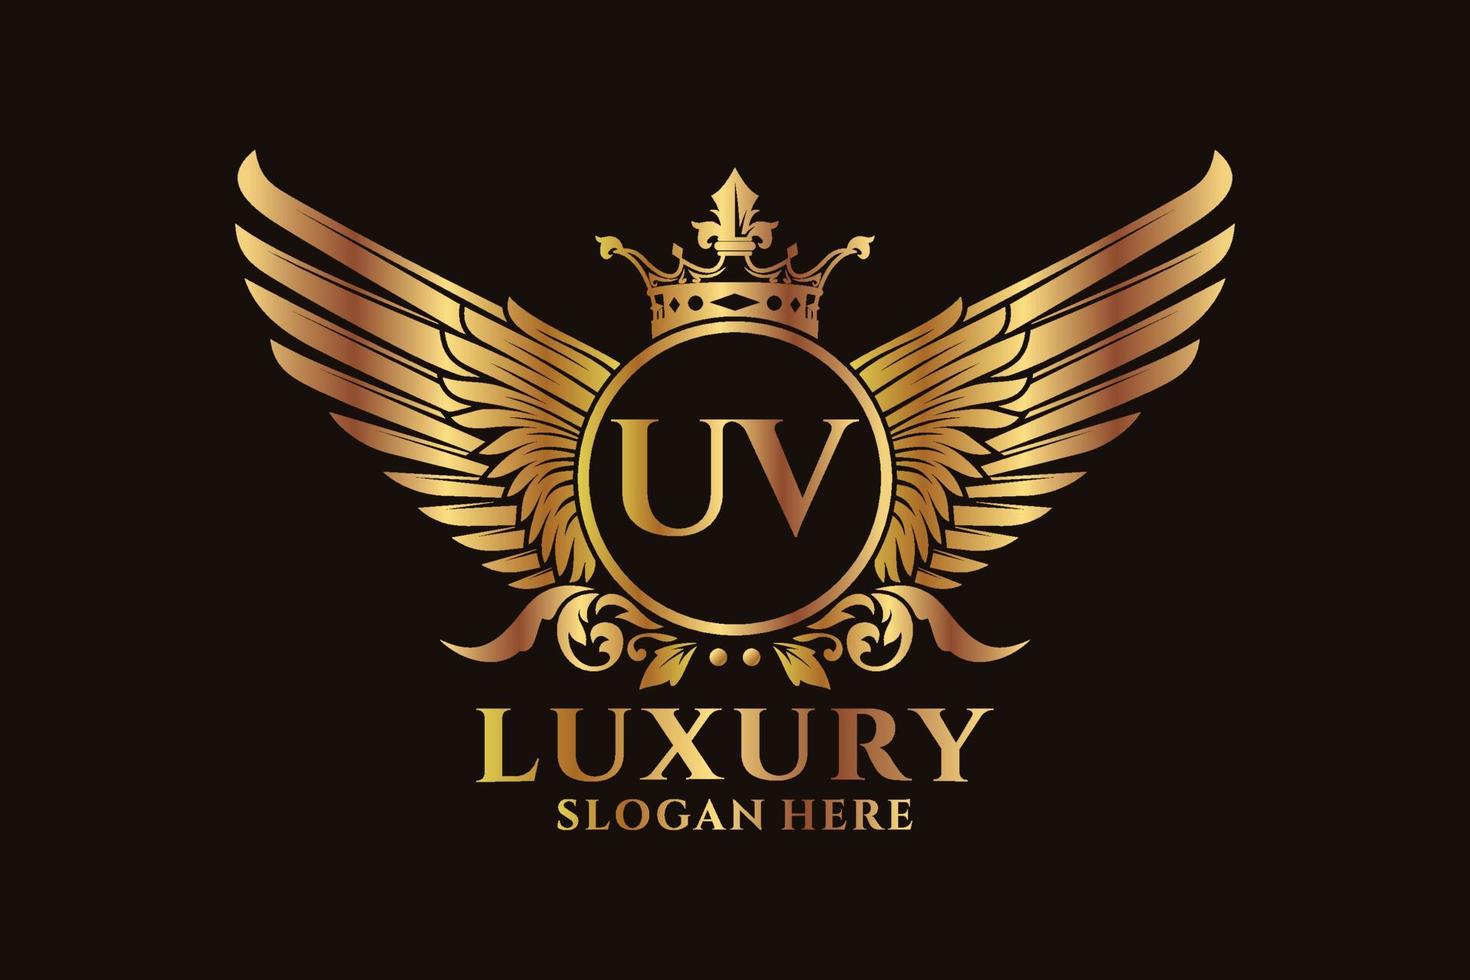 luxe Koninklijk vleugel brief uv kam goud kleur logo vector, zege logo, kam logo, vleugel logo, vector logo sjabloon.